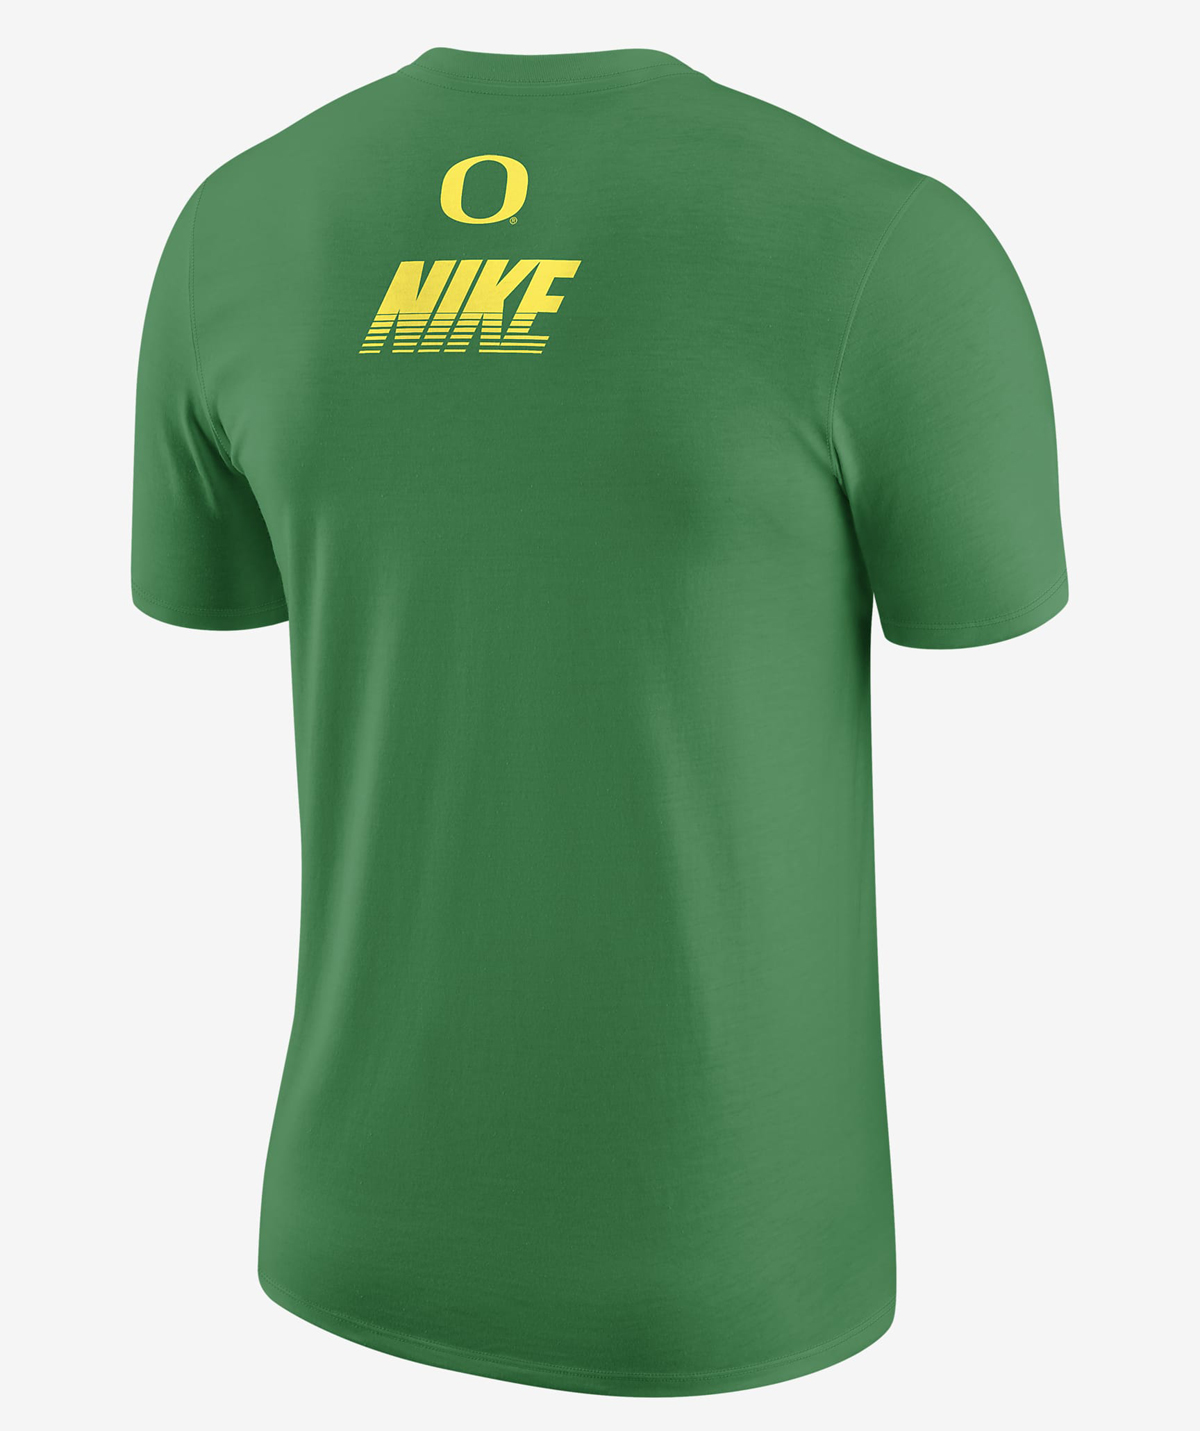 Nike-Dunk-Low-Reverse-Brazil-T-Shirt-2